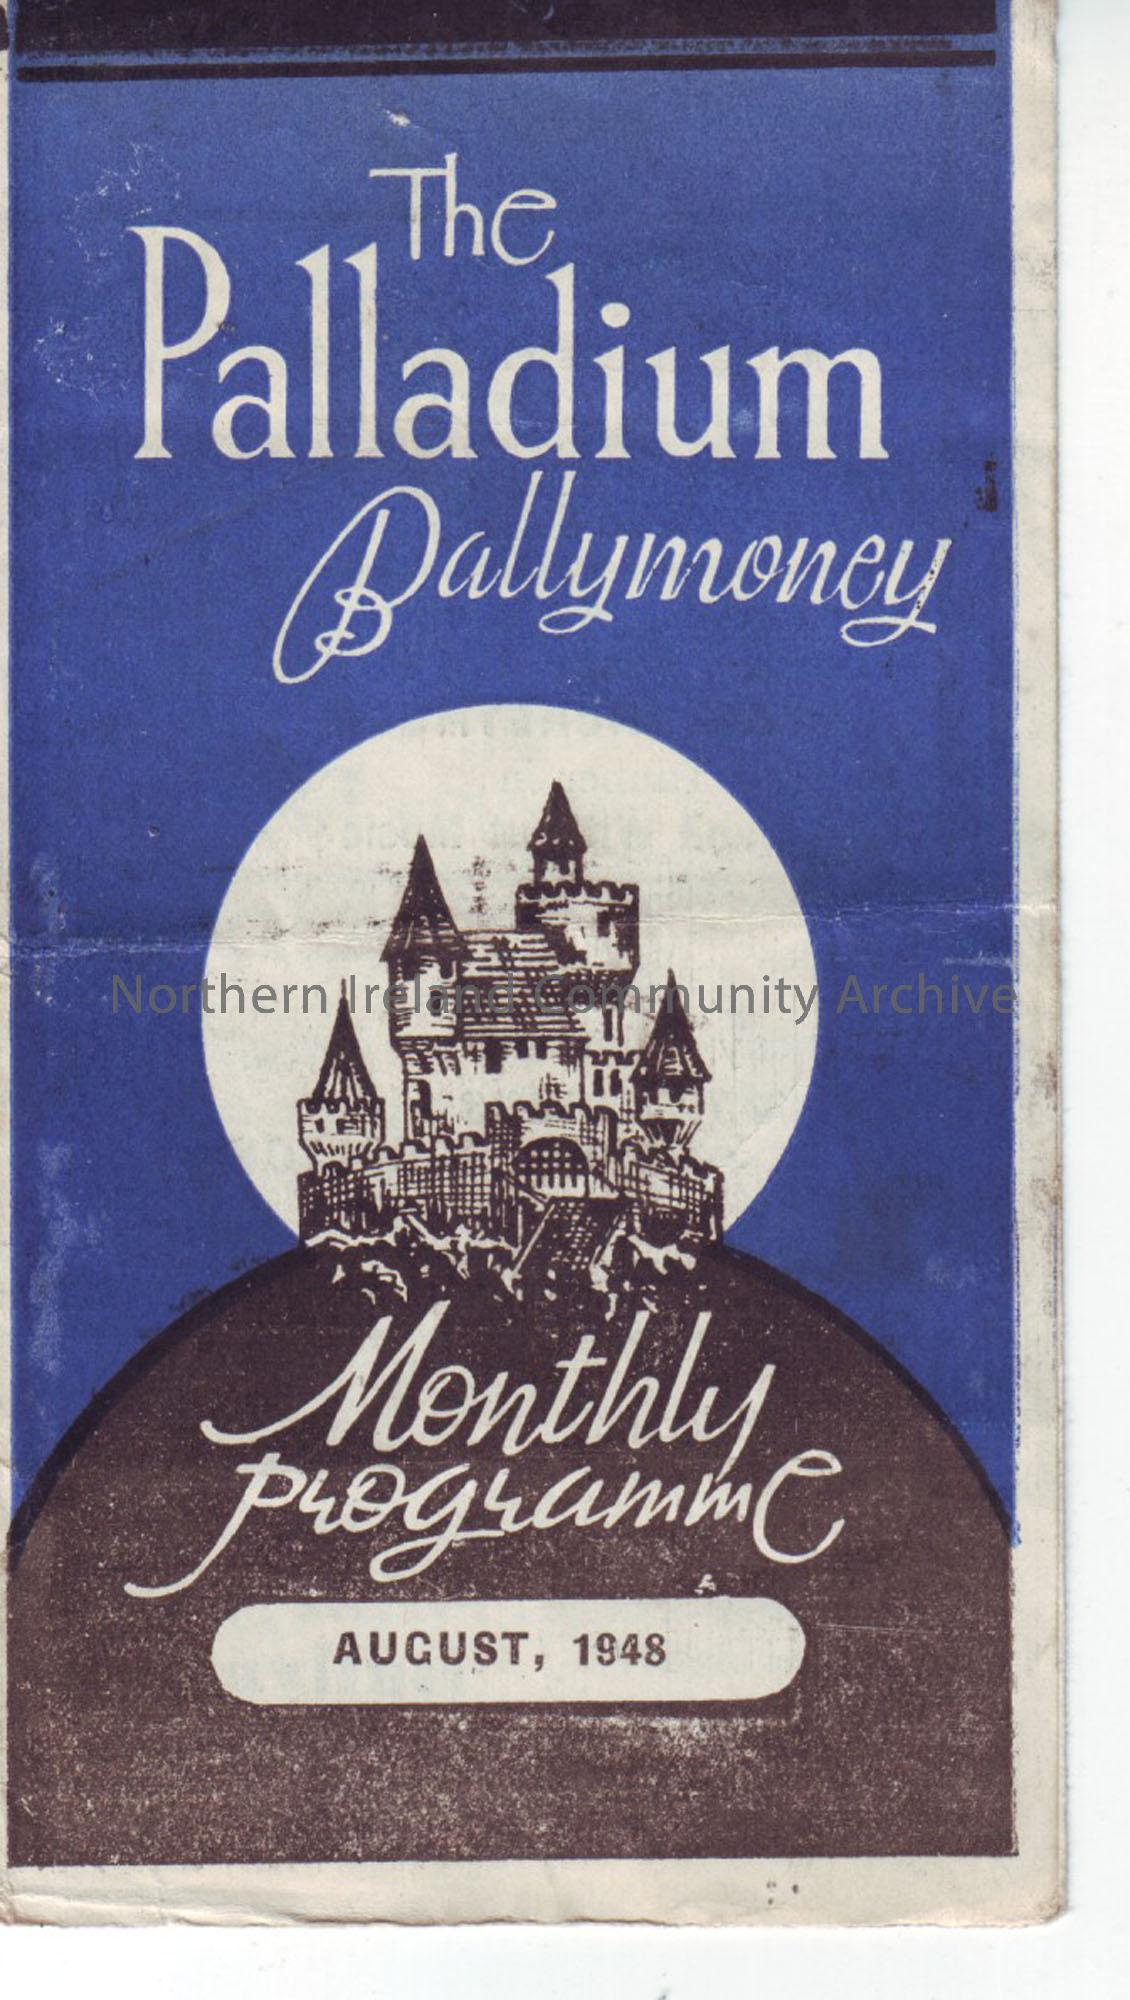 blue monthly programme for Ballymoney Palladium cinema- August 1948